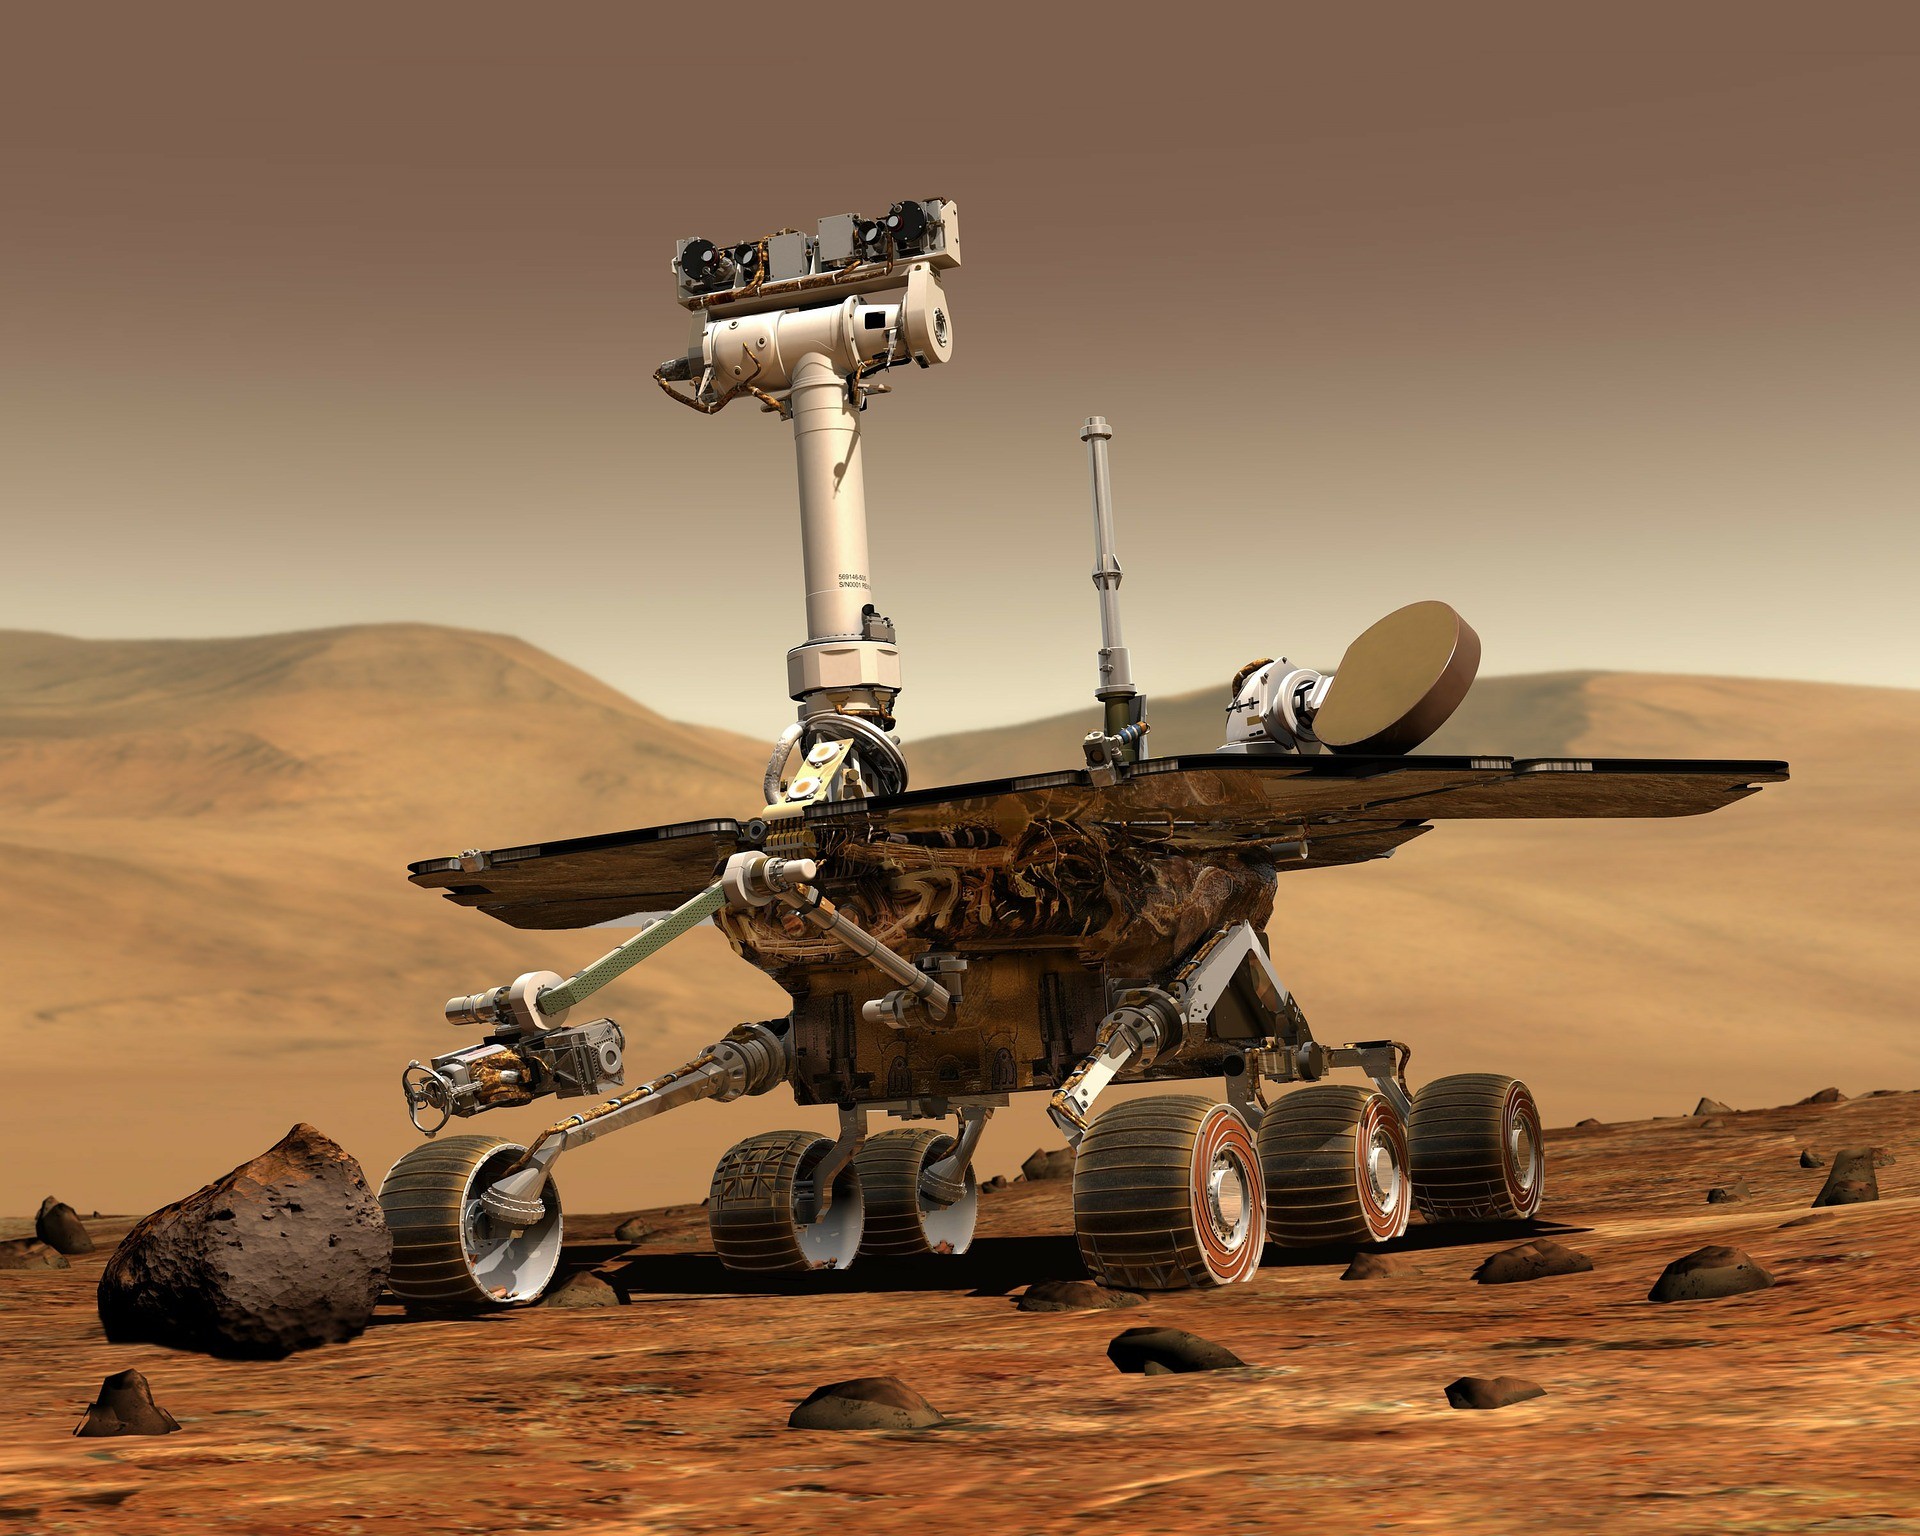 El robot rover Opportunity